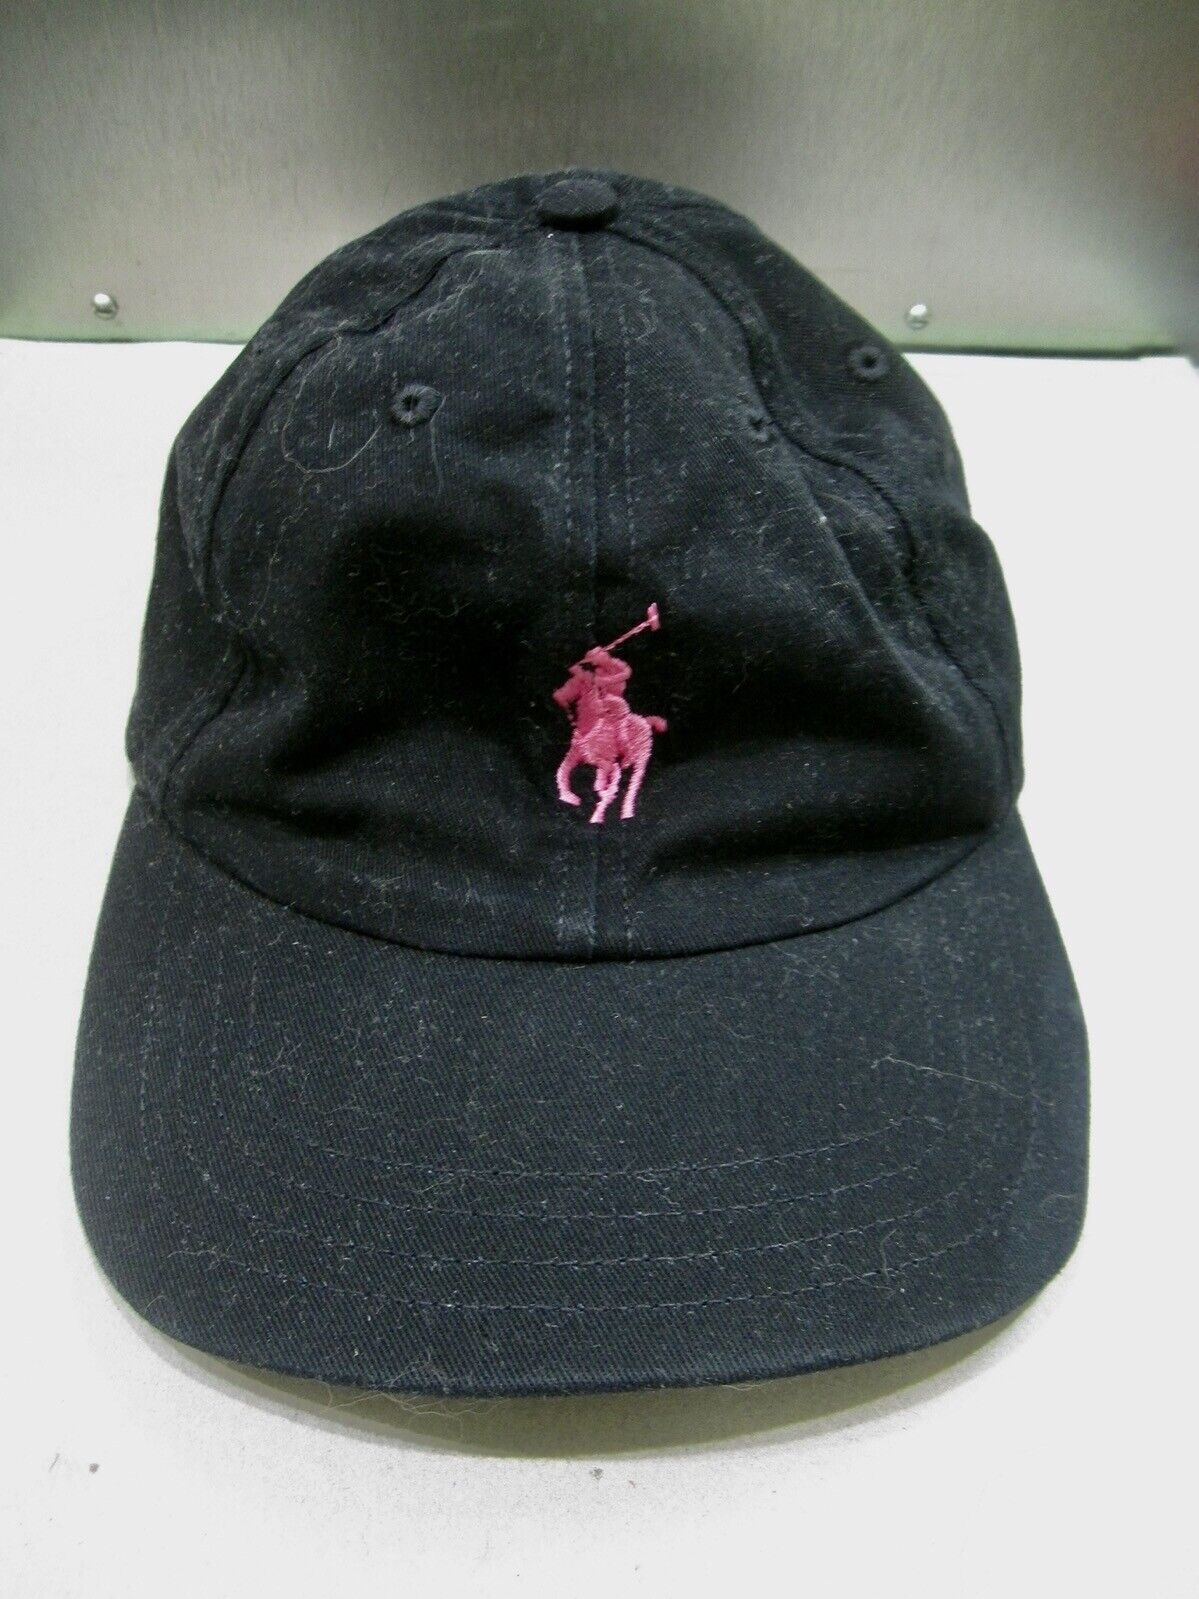 Ralph Label Black Label Pink Pony Black Cap Hat Adjustable Unisex Sale!!